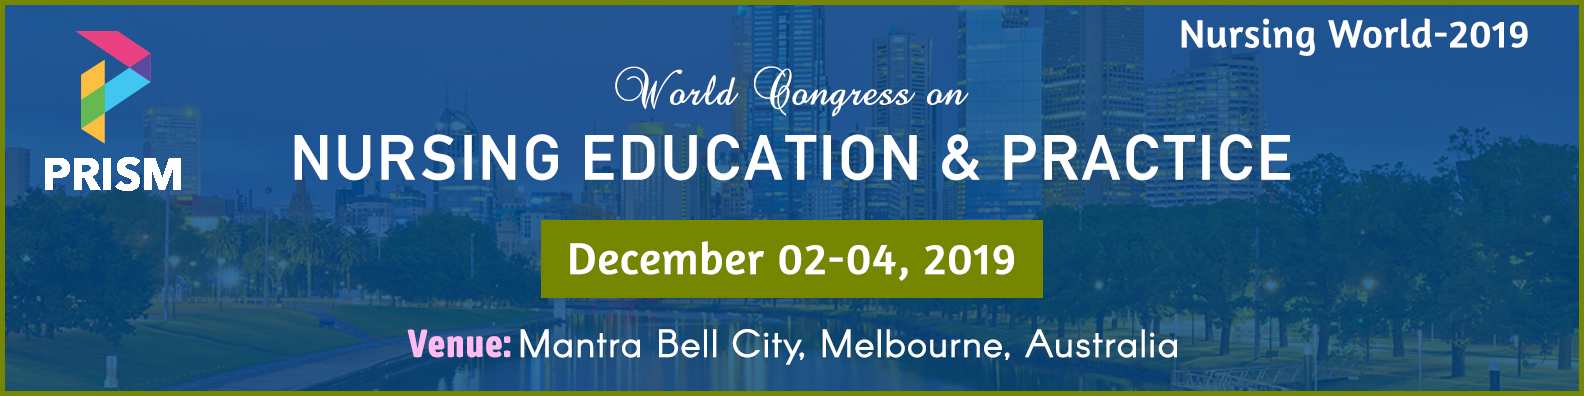 World Congress on Nursing Education & Practice (Nursing World-2019), Melbourne, Victoria, Australia